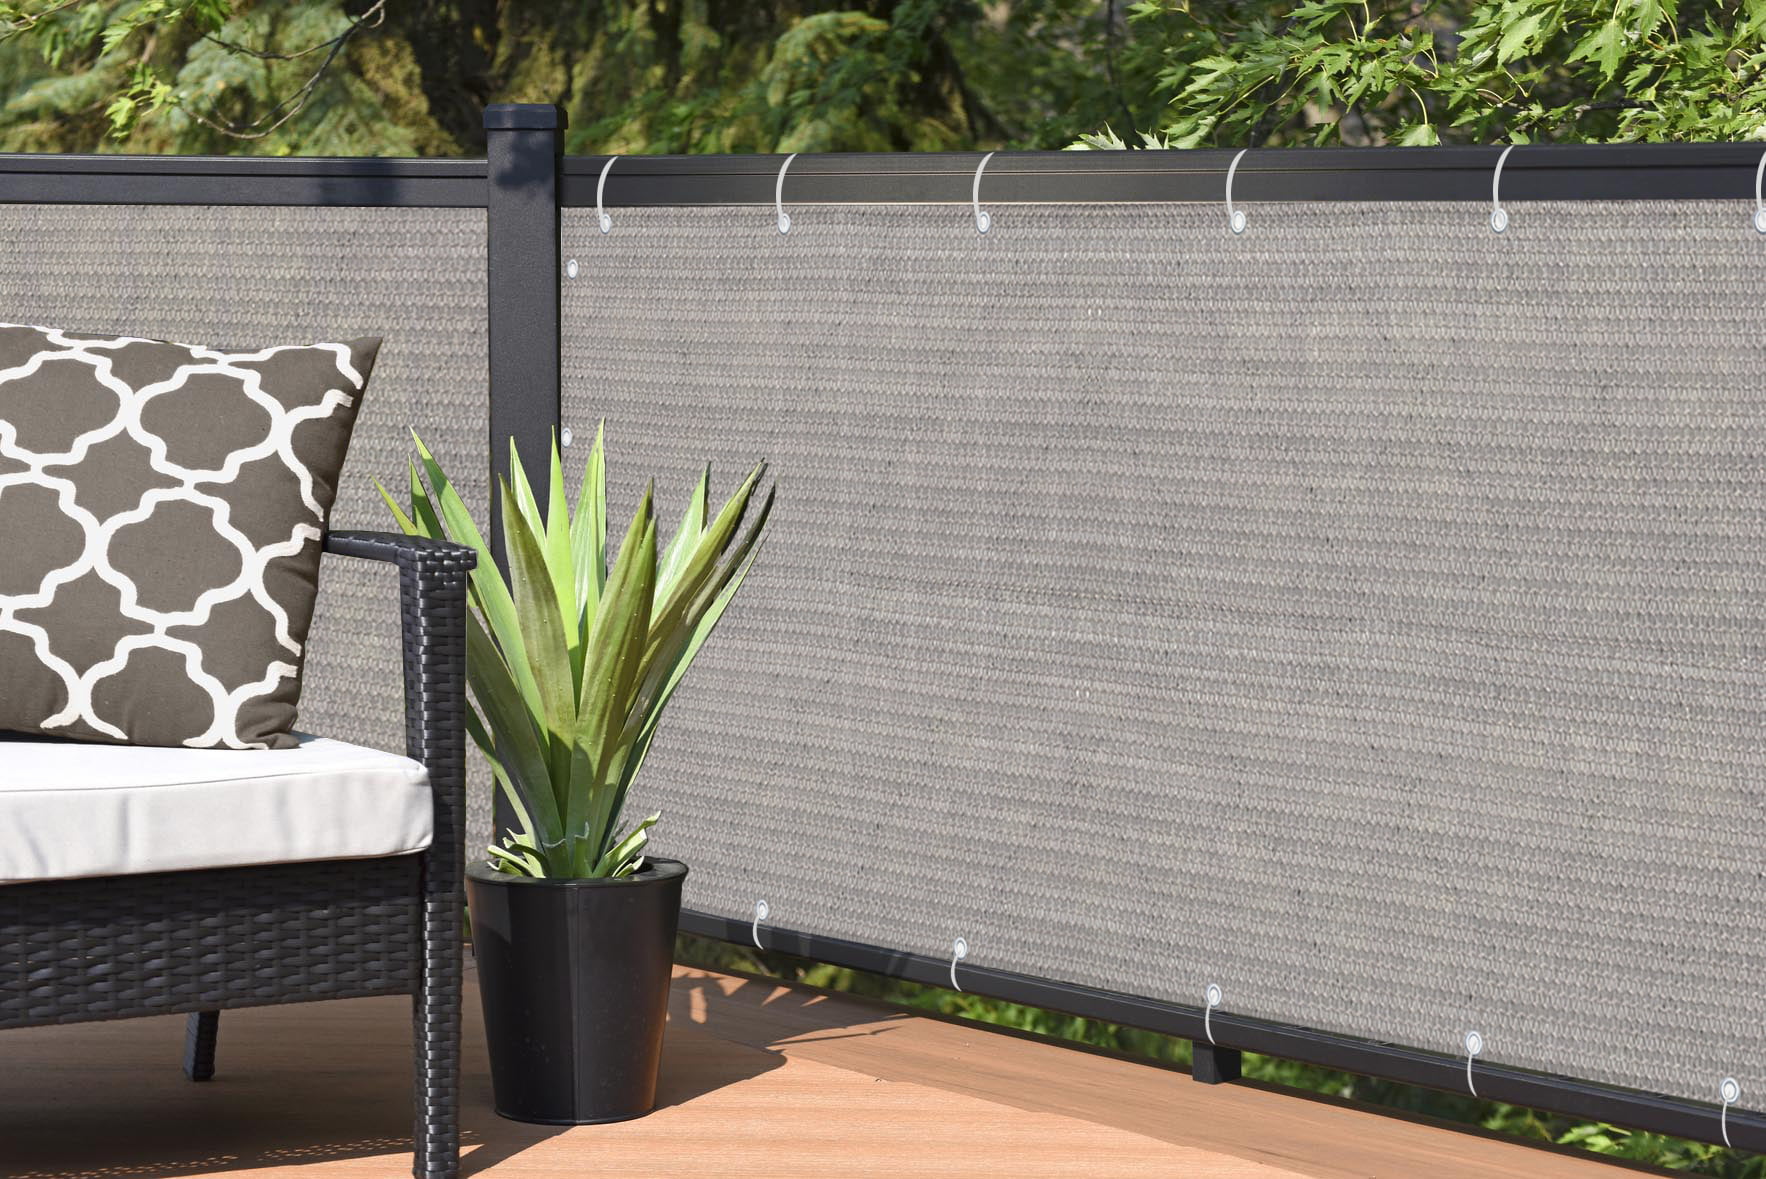 Amogo Balcony Privacy Screen Fence Mesh for Patio Balcony Windscreen Sun Shade 